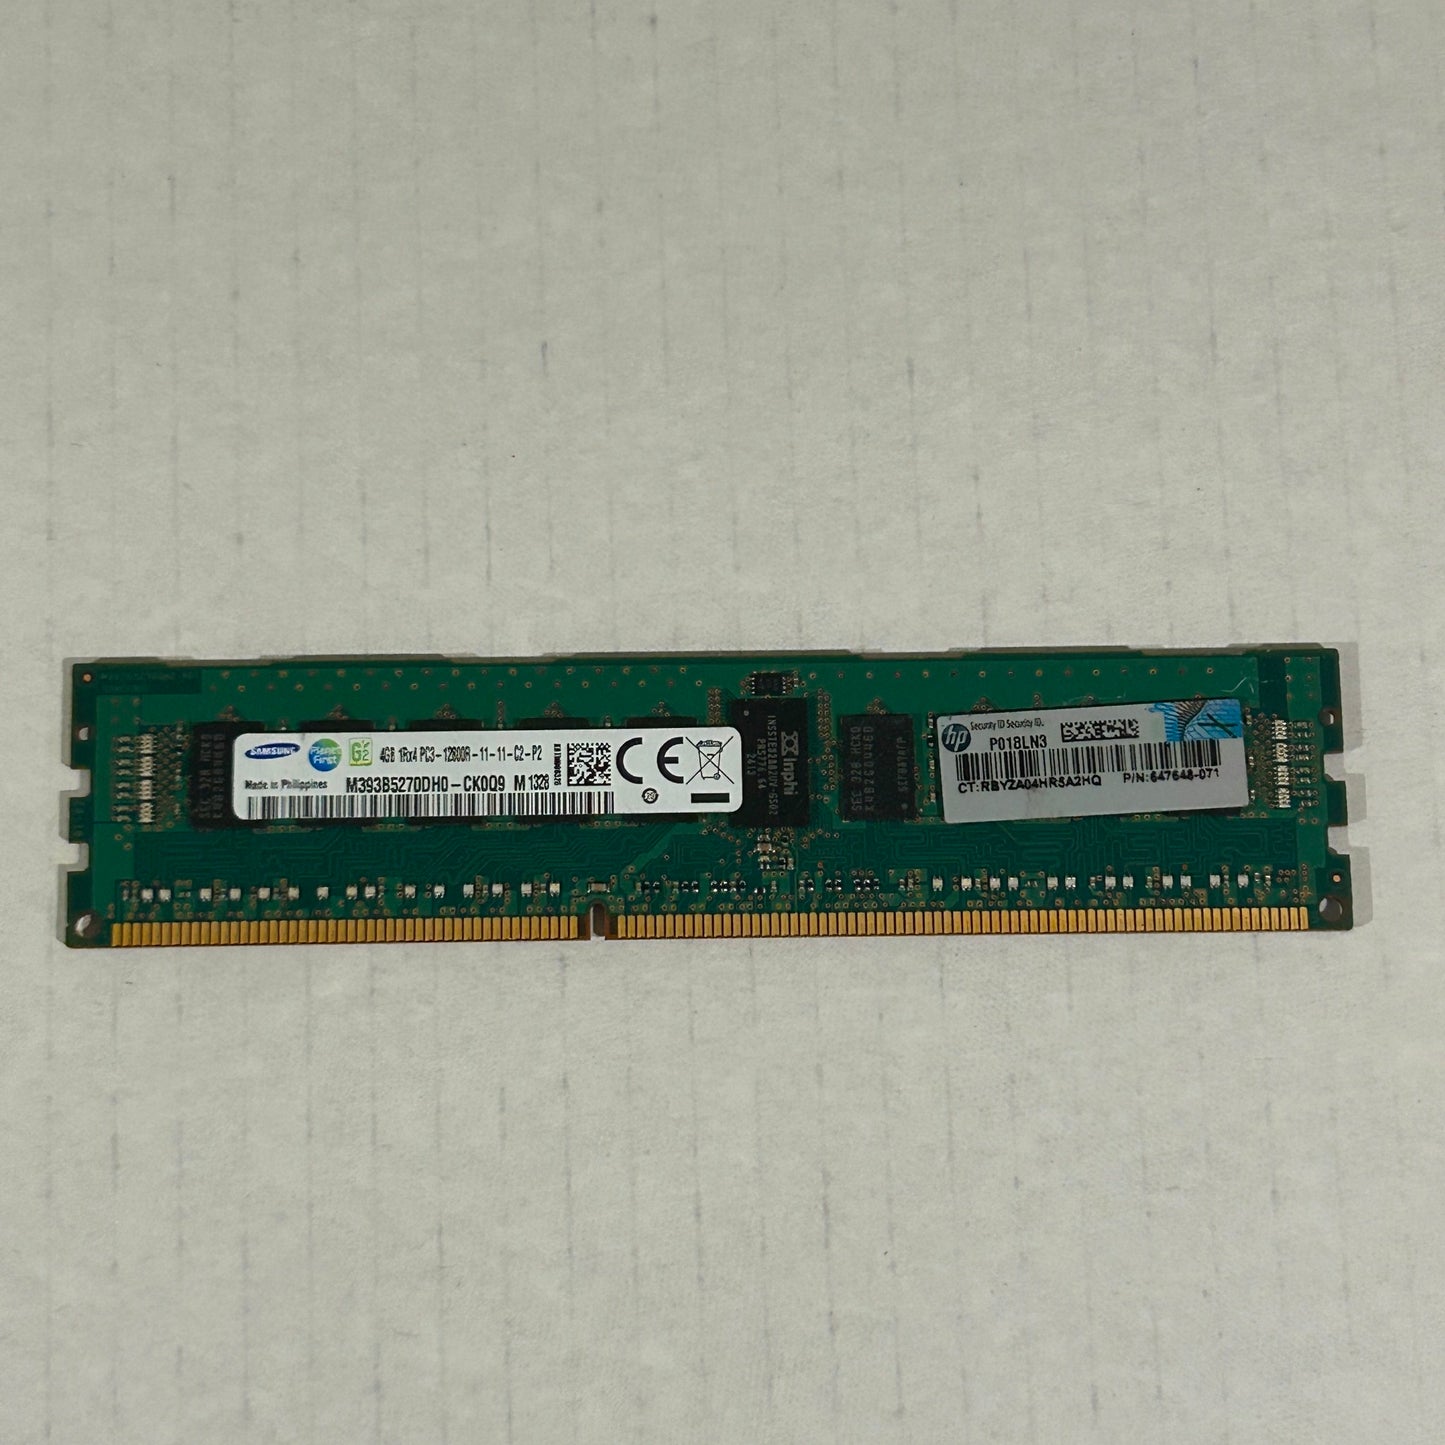 Samsung 4GB DDR3-1600MHz PC3-12800 ECC Server RAM - M393B5270DH0-CK0Q9